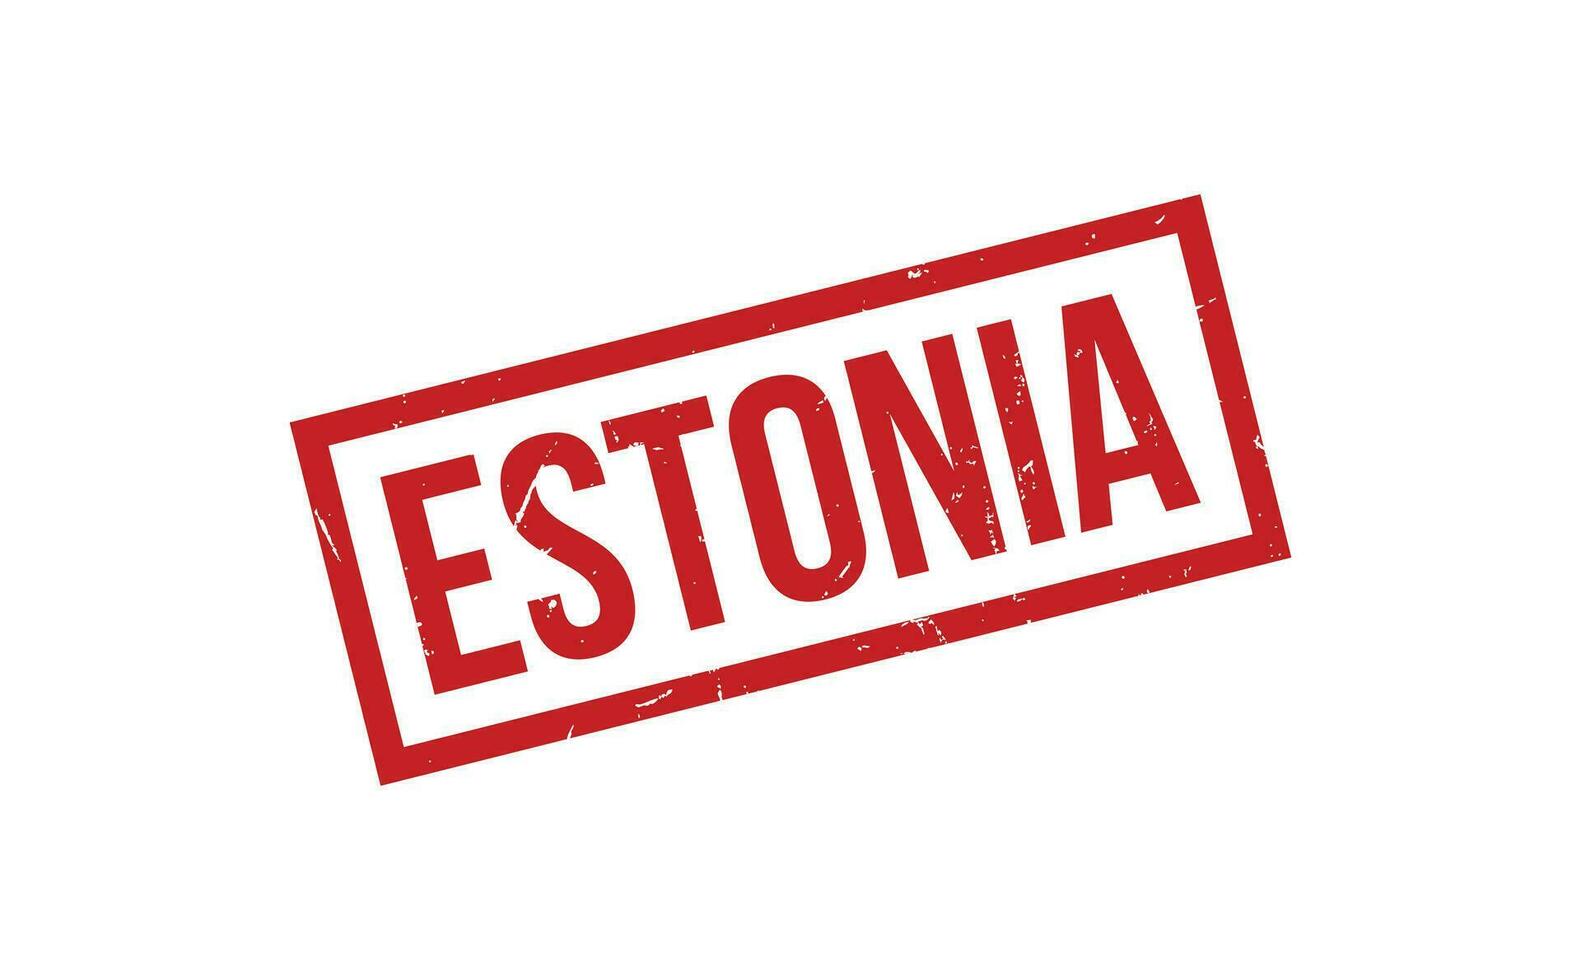 Estonia Rubber Stamp Seal Vector